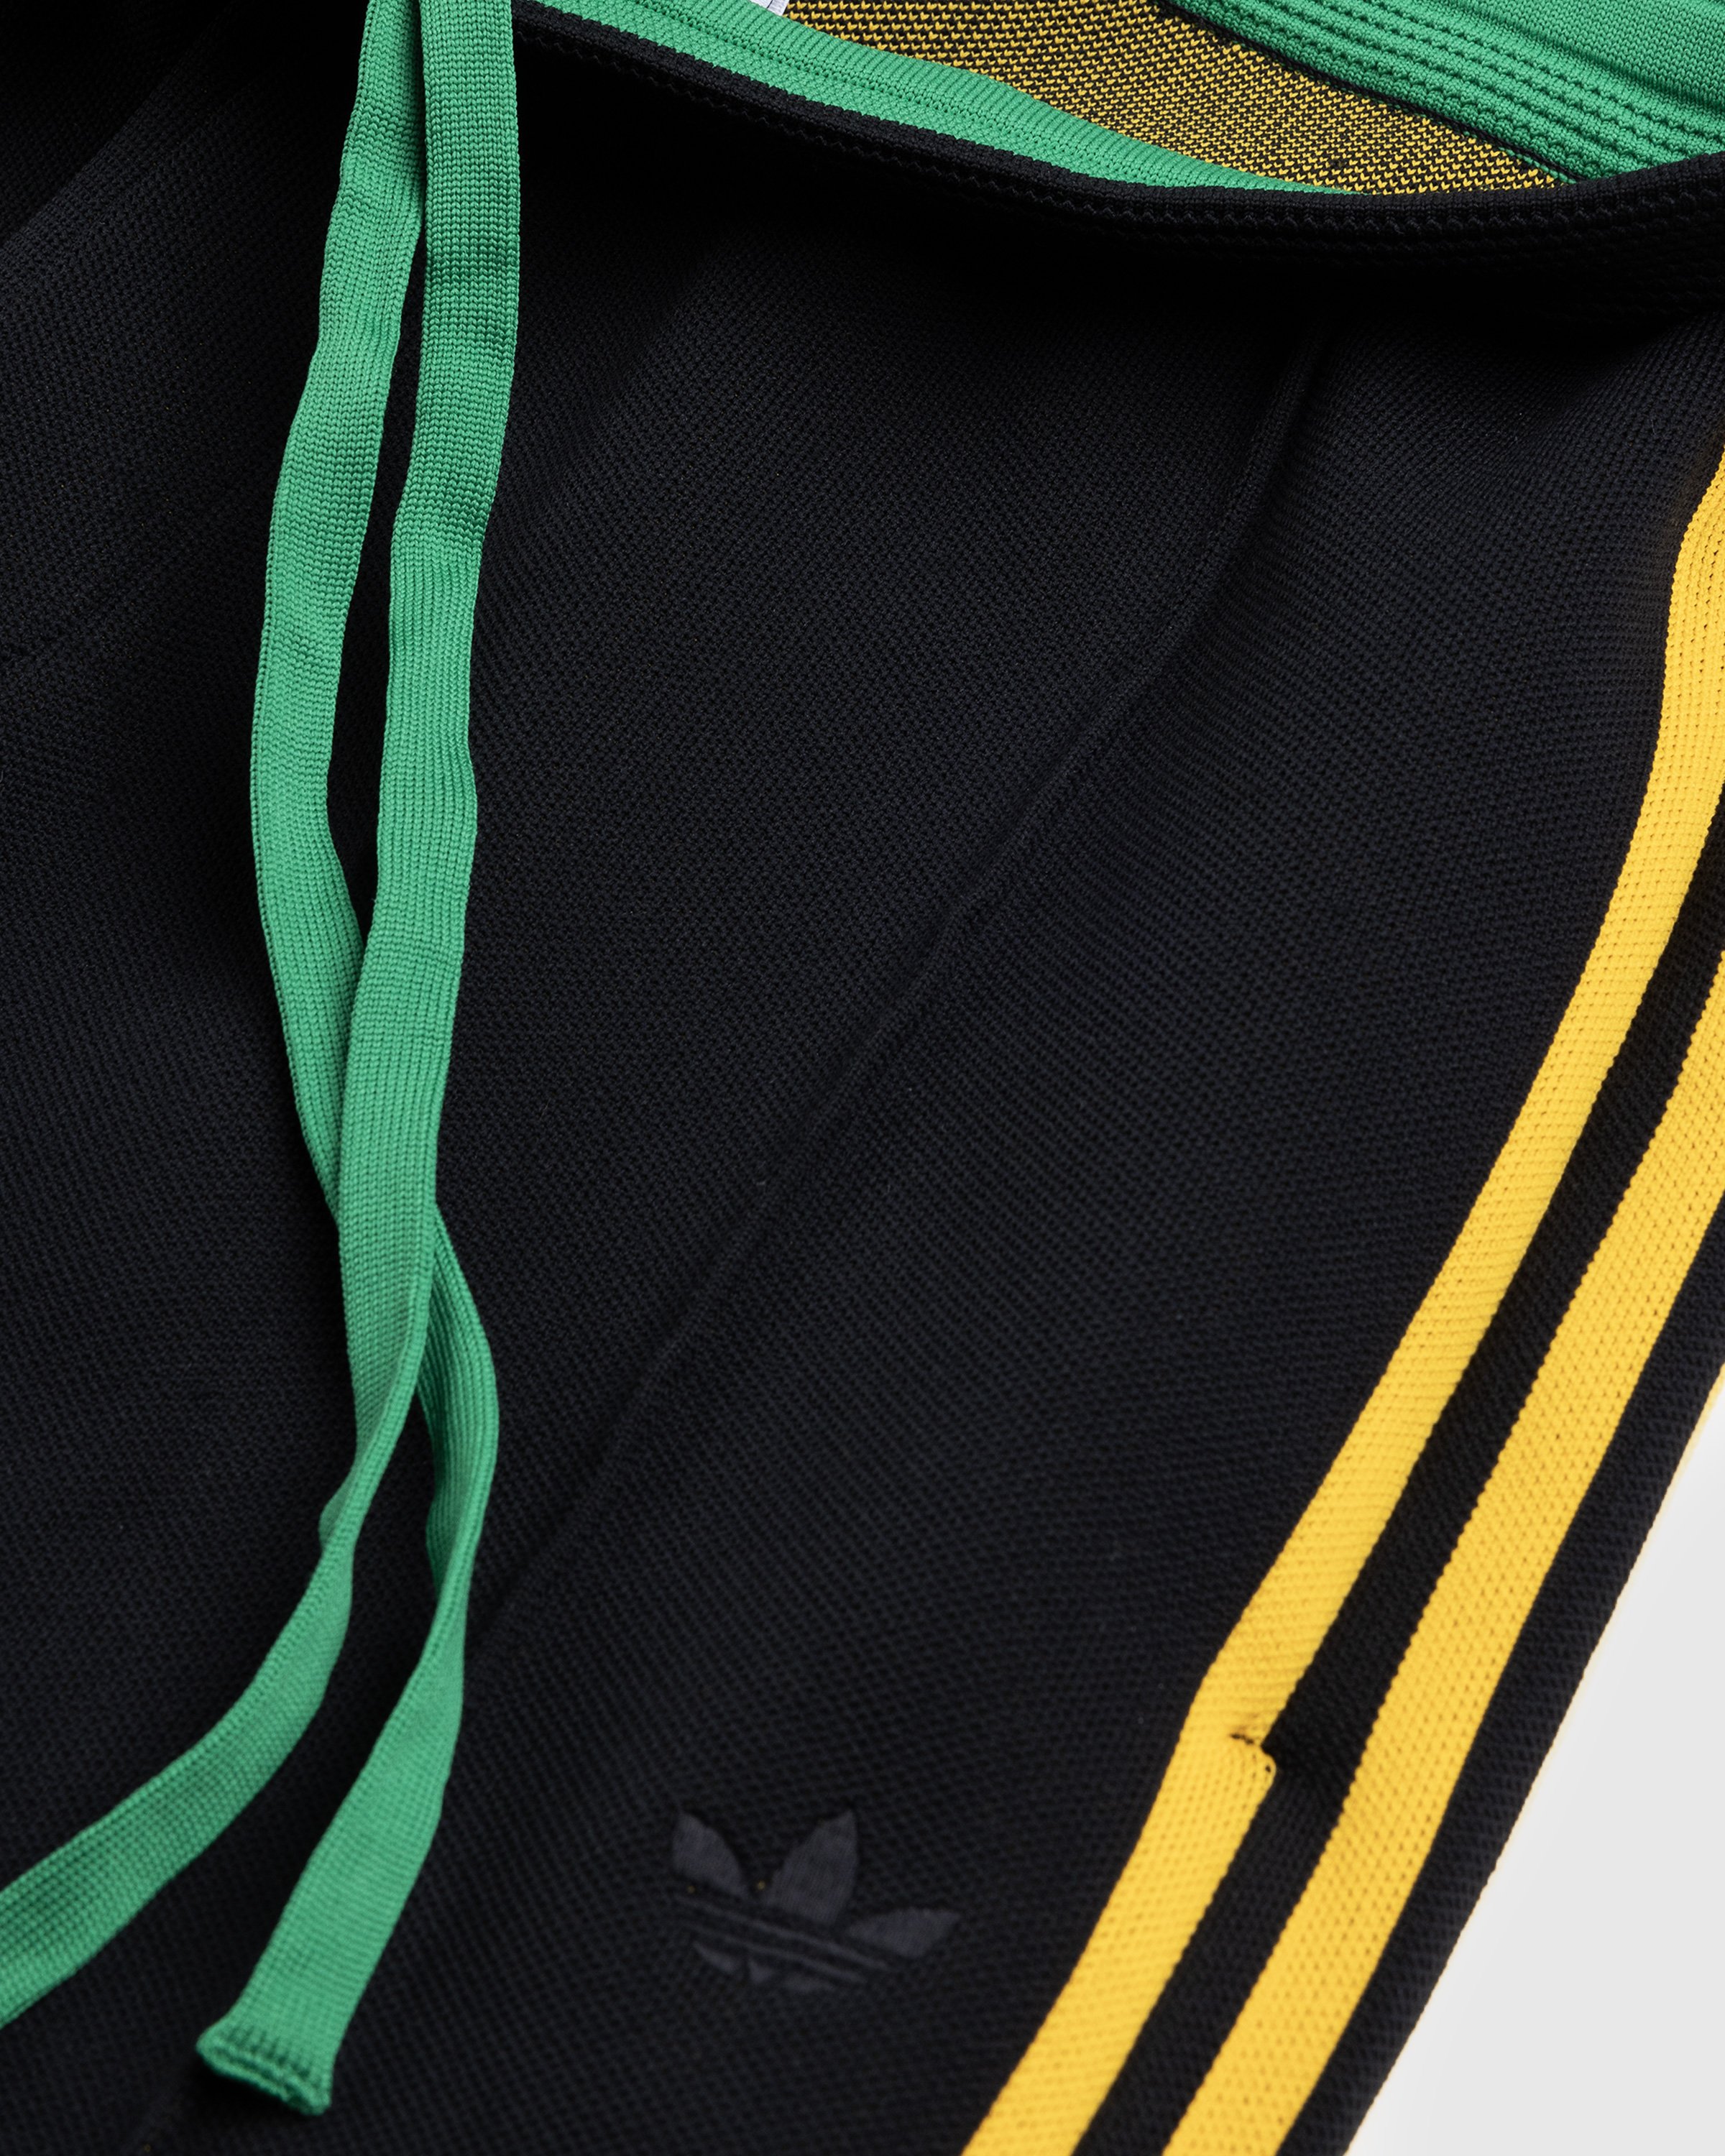 Adidas x Wales Bonner - Knit Track Pant Black - Clothing - Black - Image 5